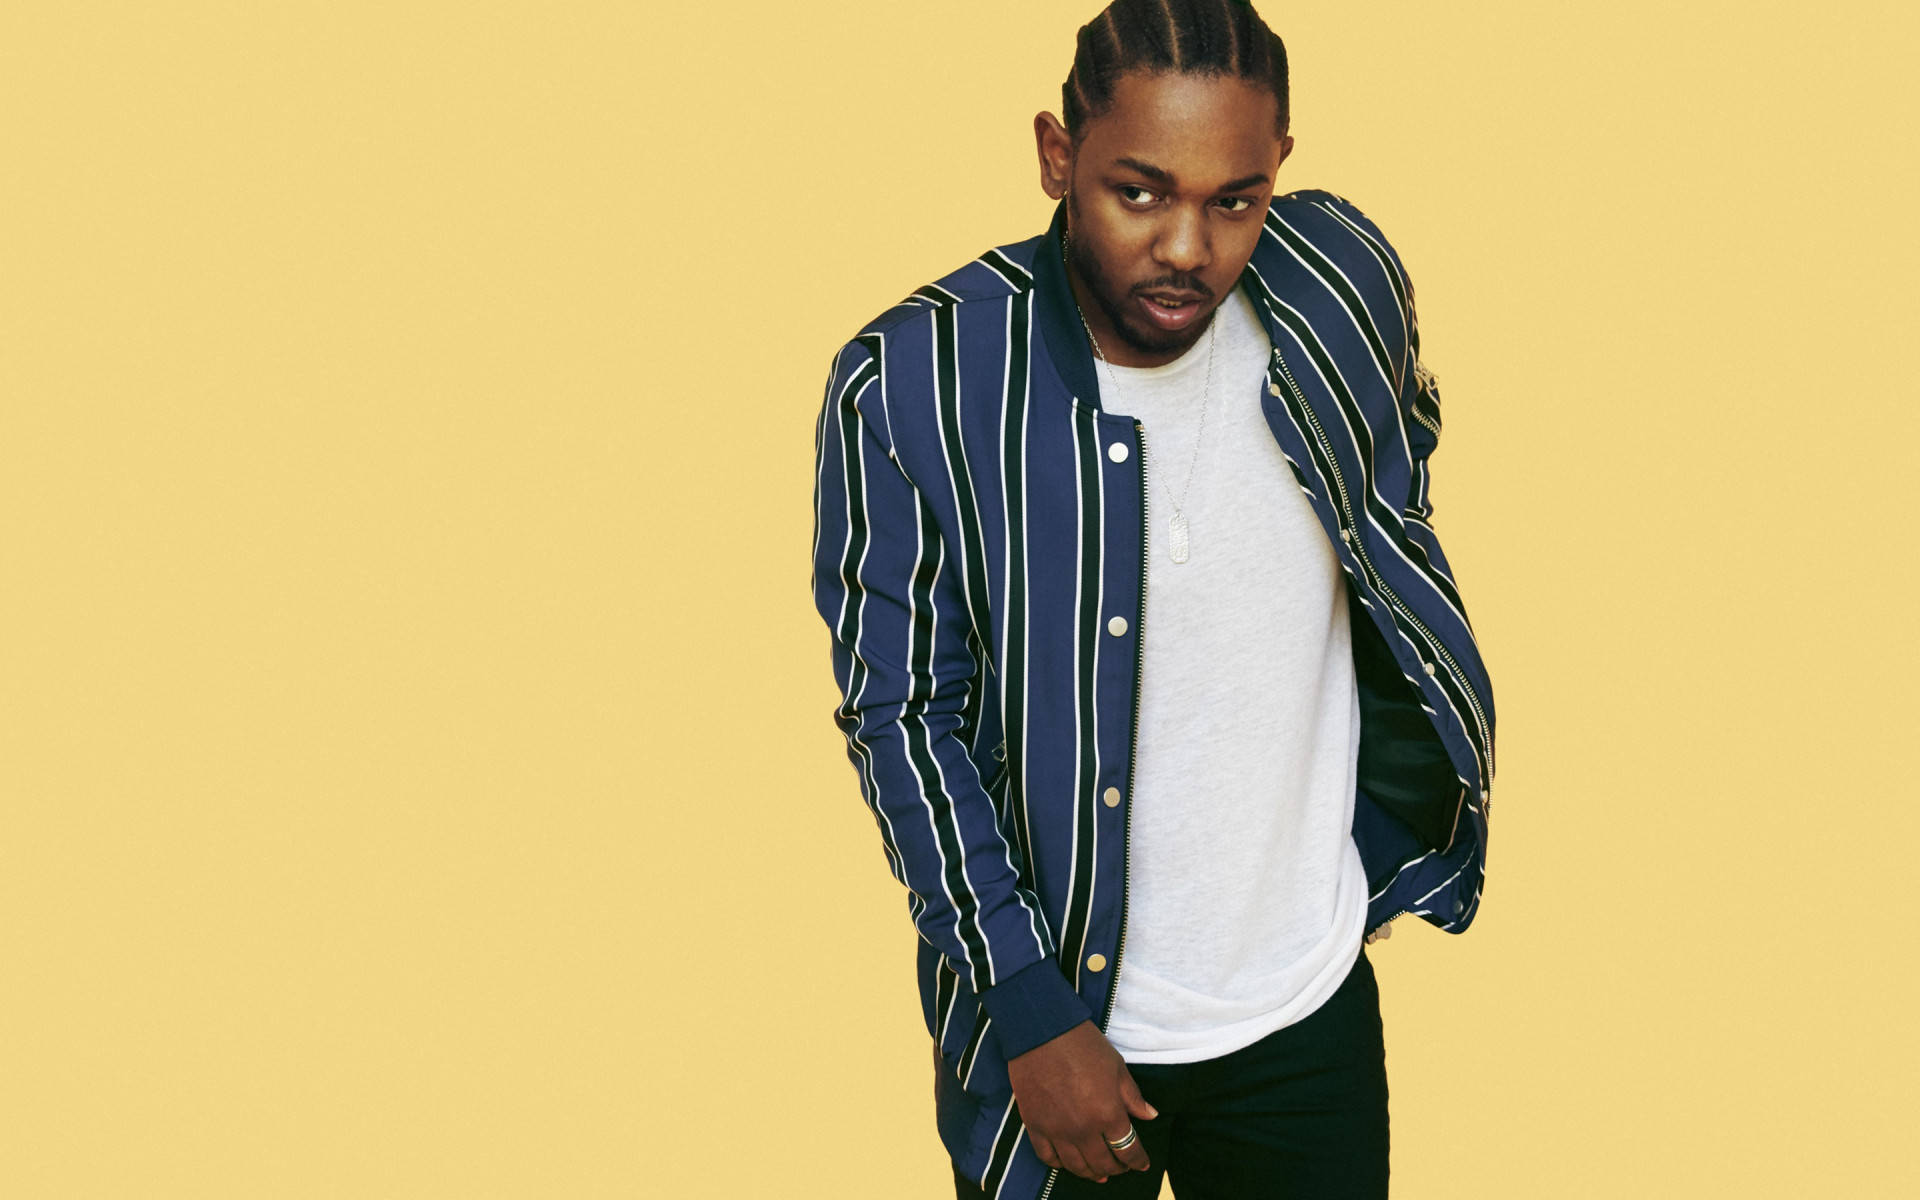 Download Kendrick Lamar Fotoshoot. Wallpaper | Wallpapers.com